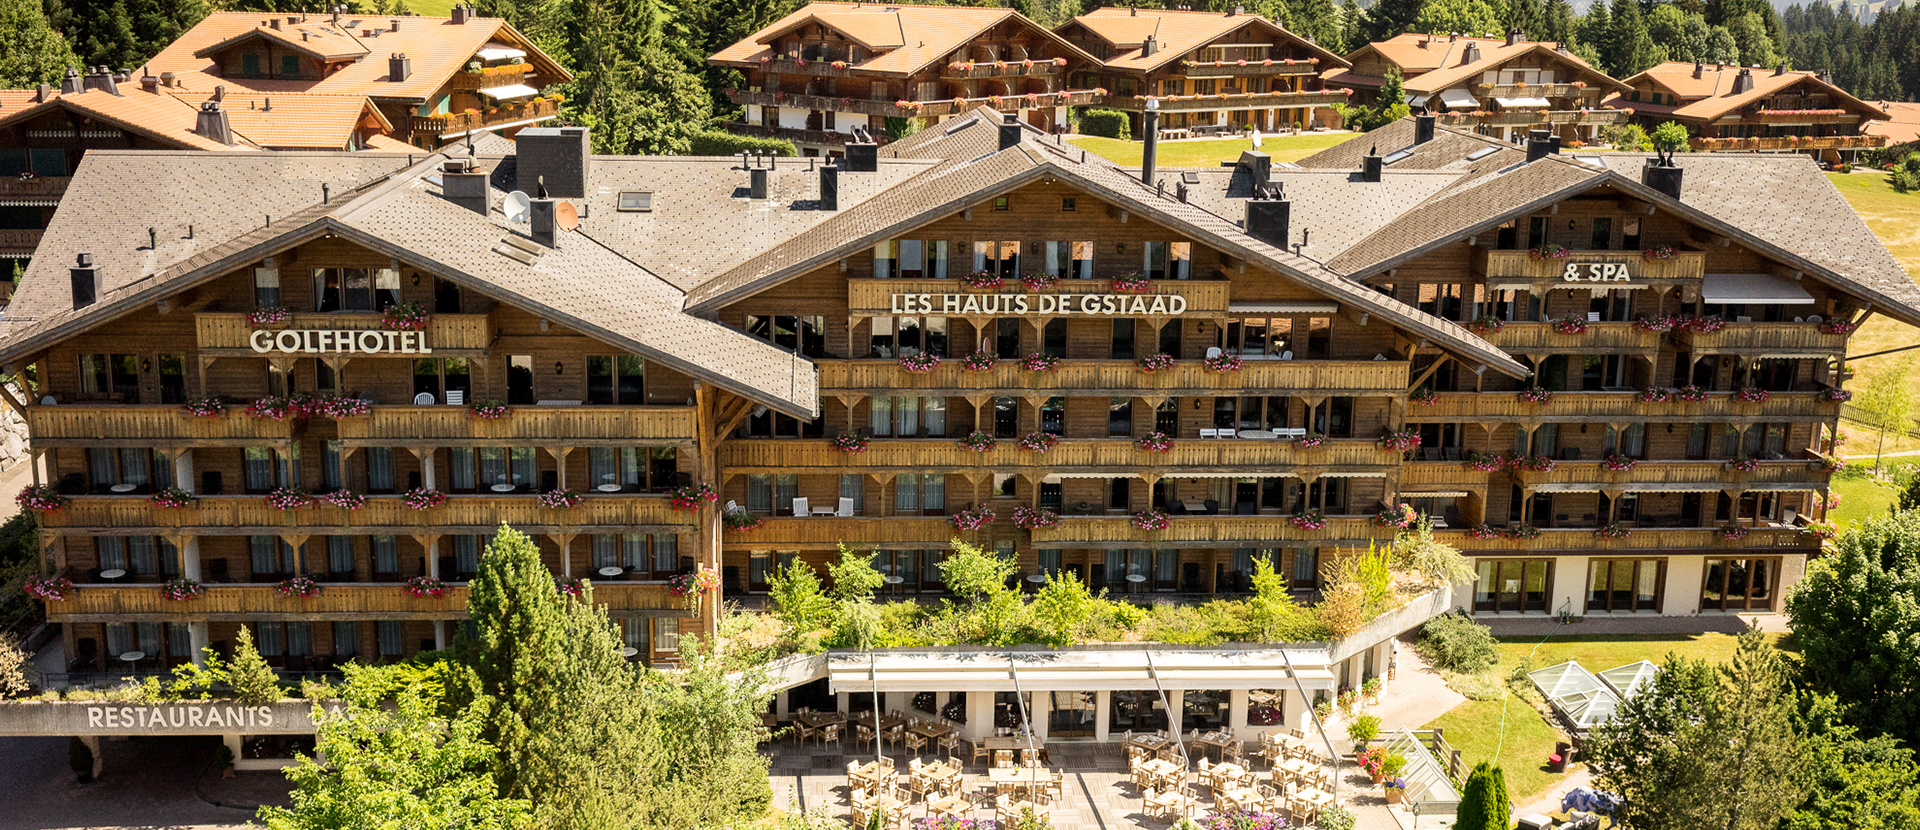 HoReCa Golfhotel Gstaad